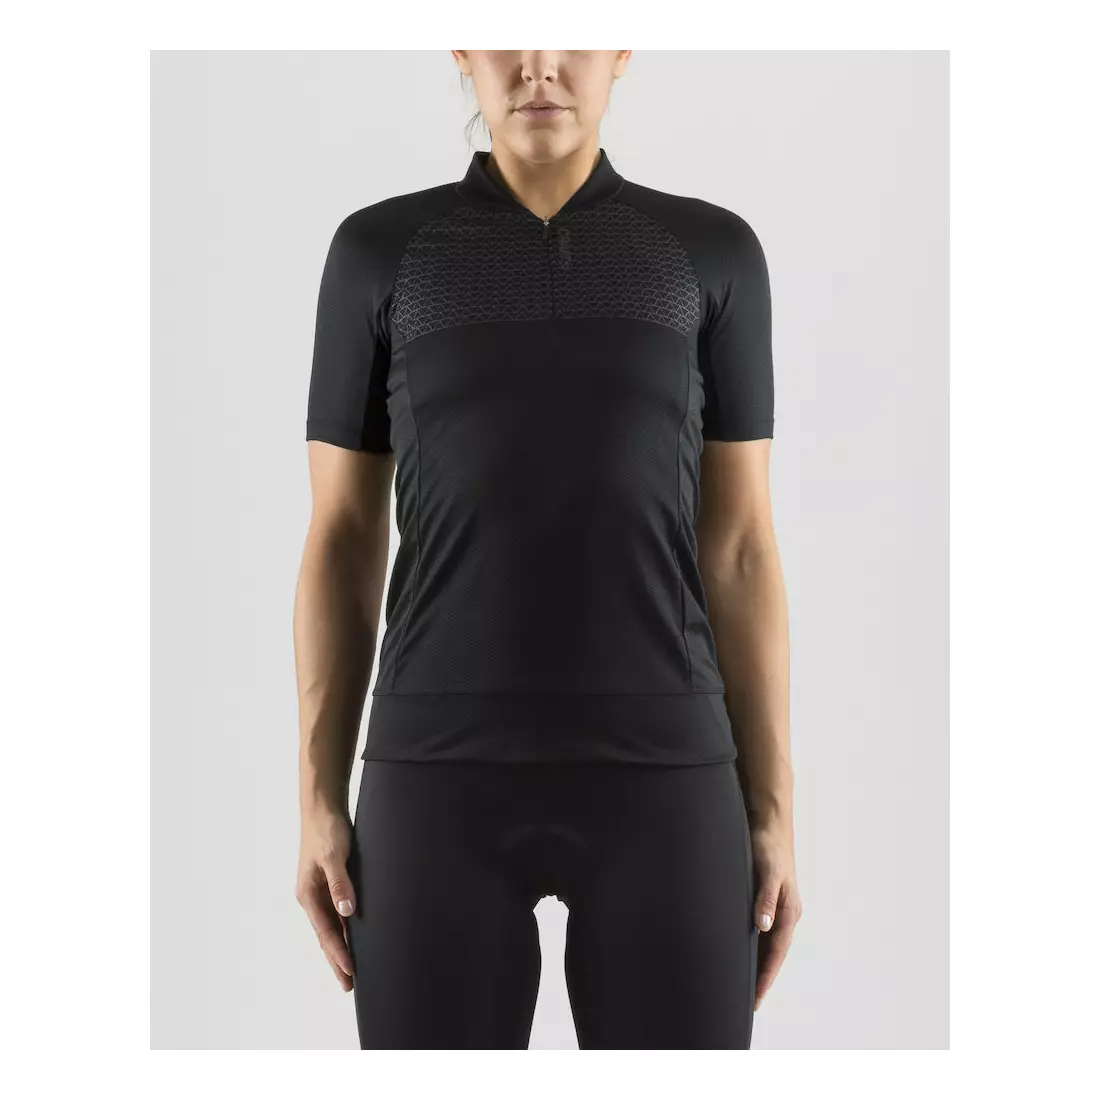 Tricou pentru ciclism pentru femei CRAFT RISE, negru, 1906075-999000